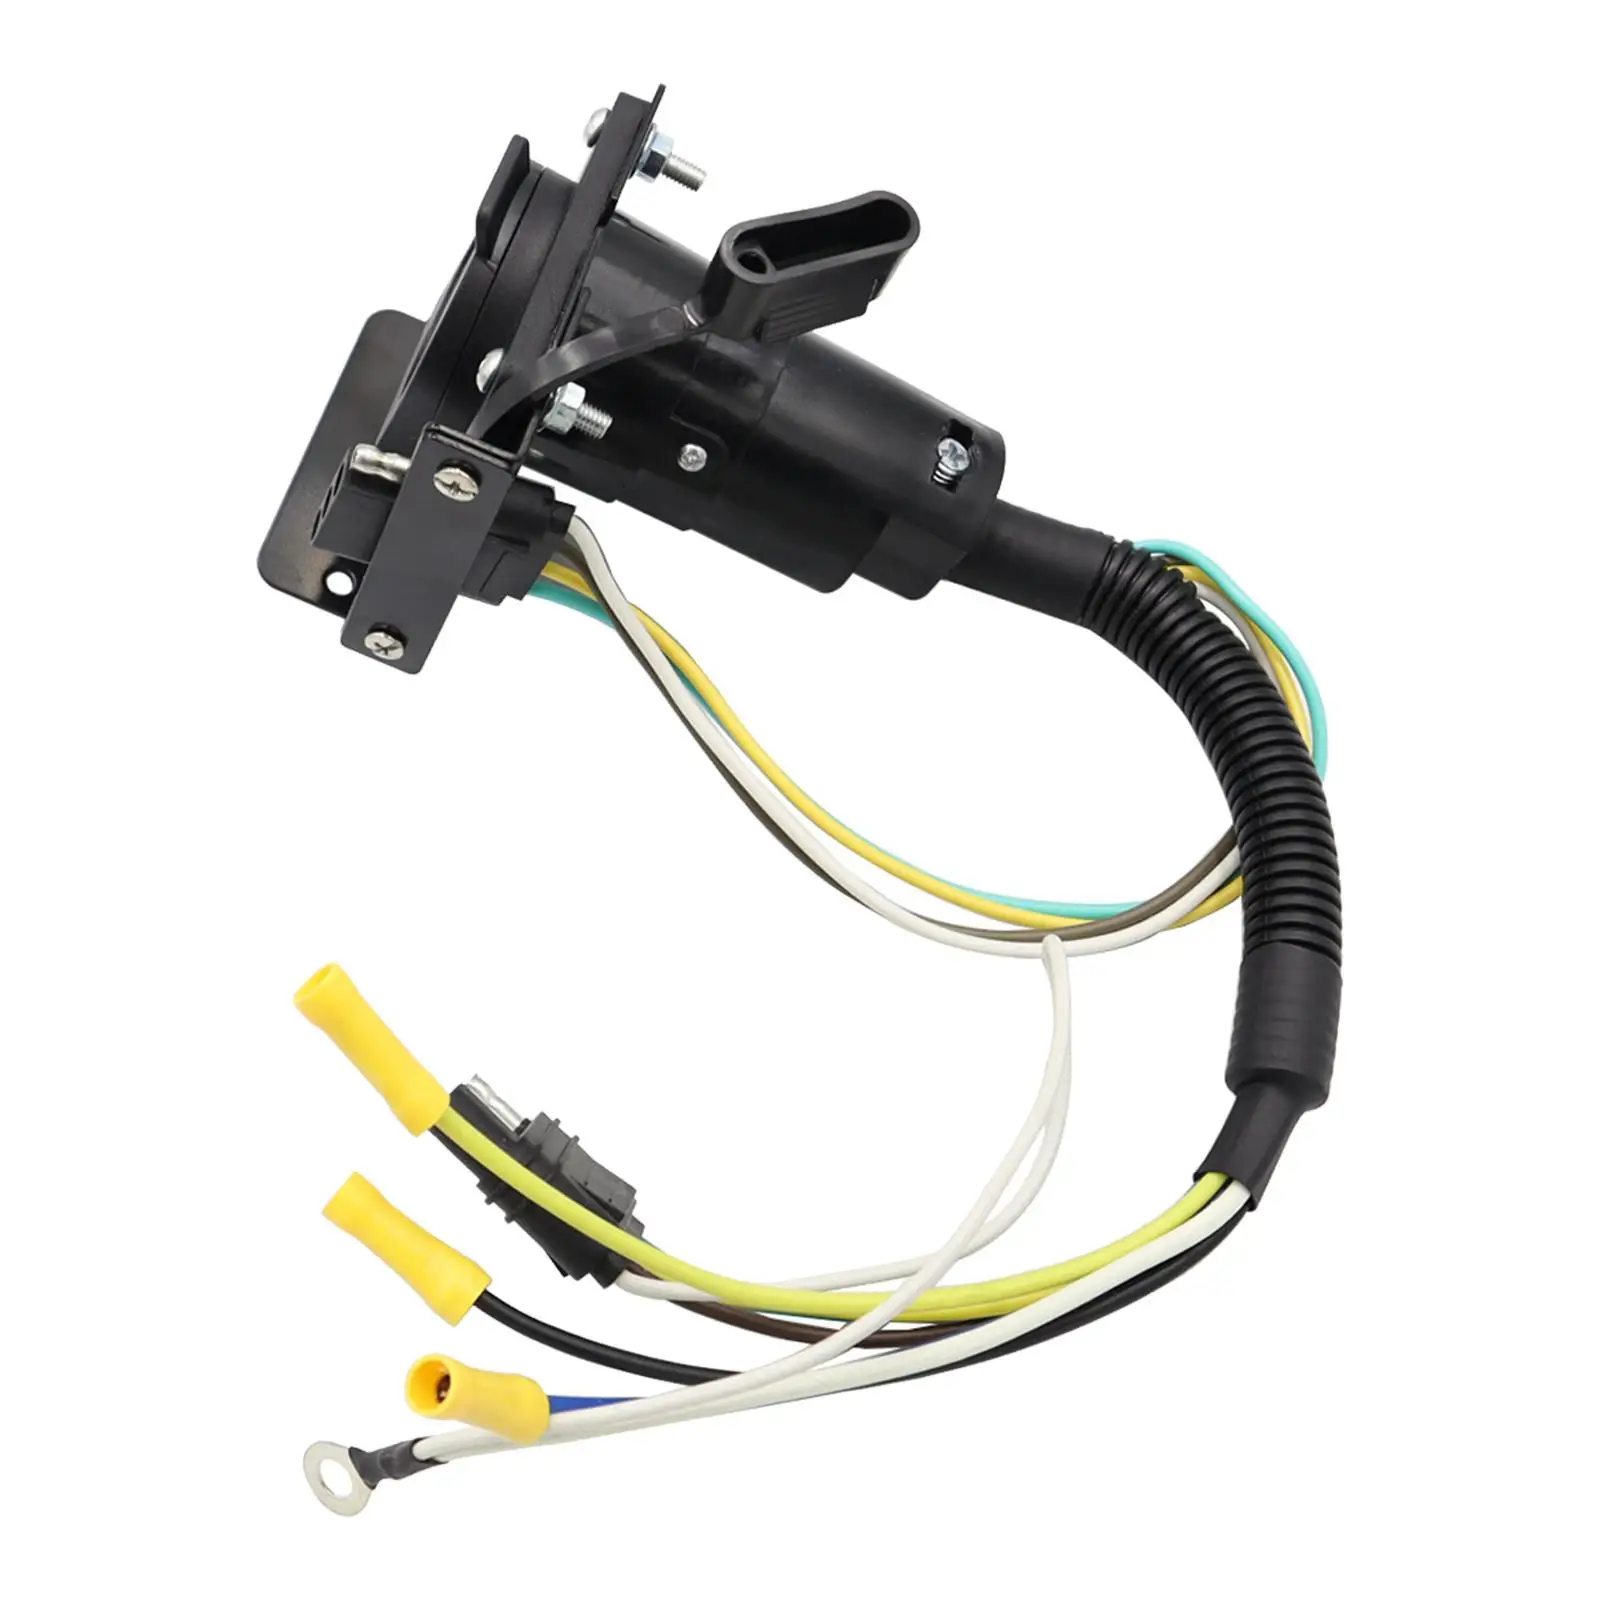 4-Way Flat Female Trailer Wiring RV Trailer Adapter Plug Professional Easy Installation Trailer Wiring Adapter for Trailer